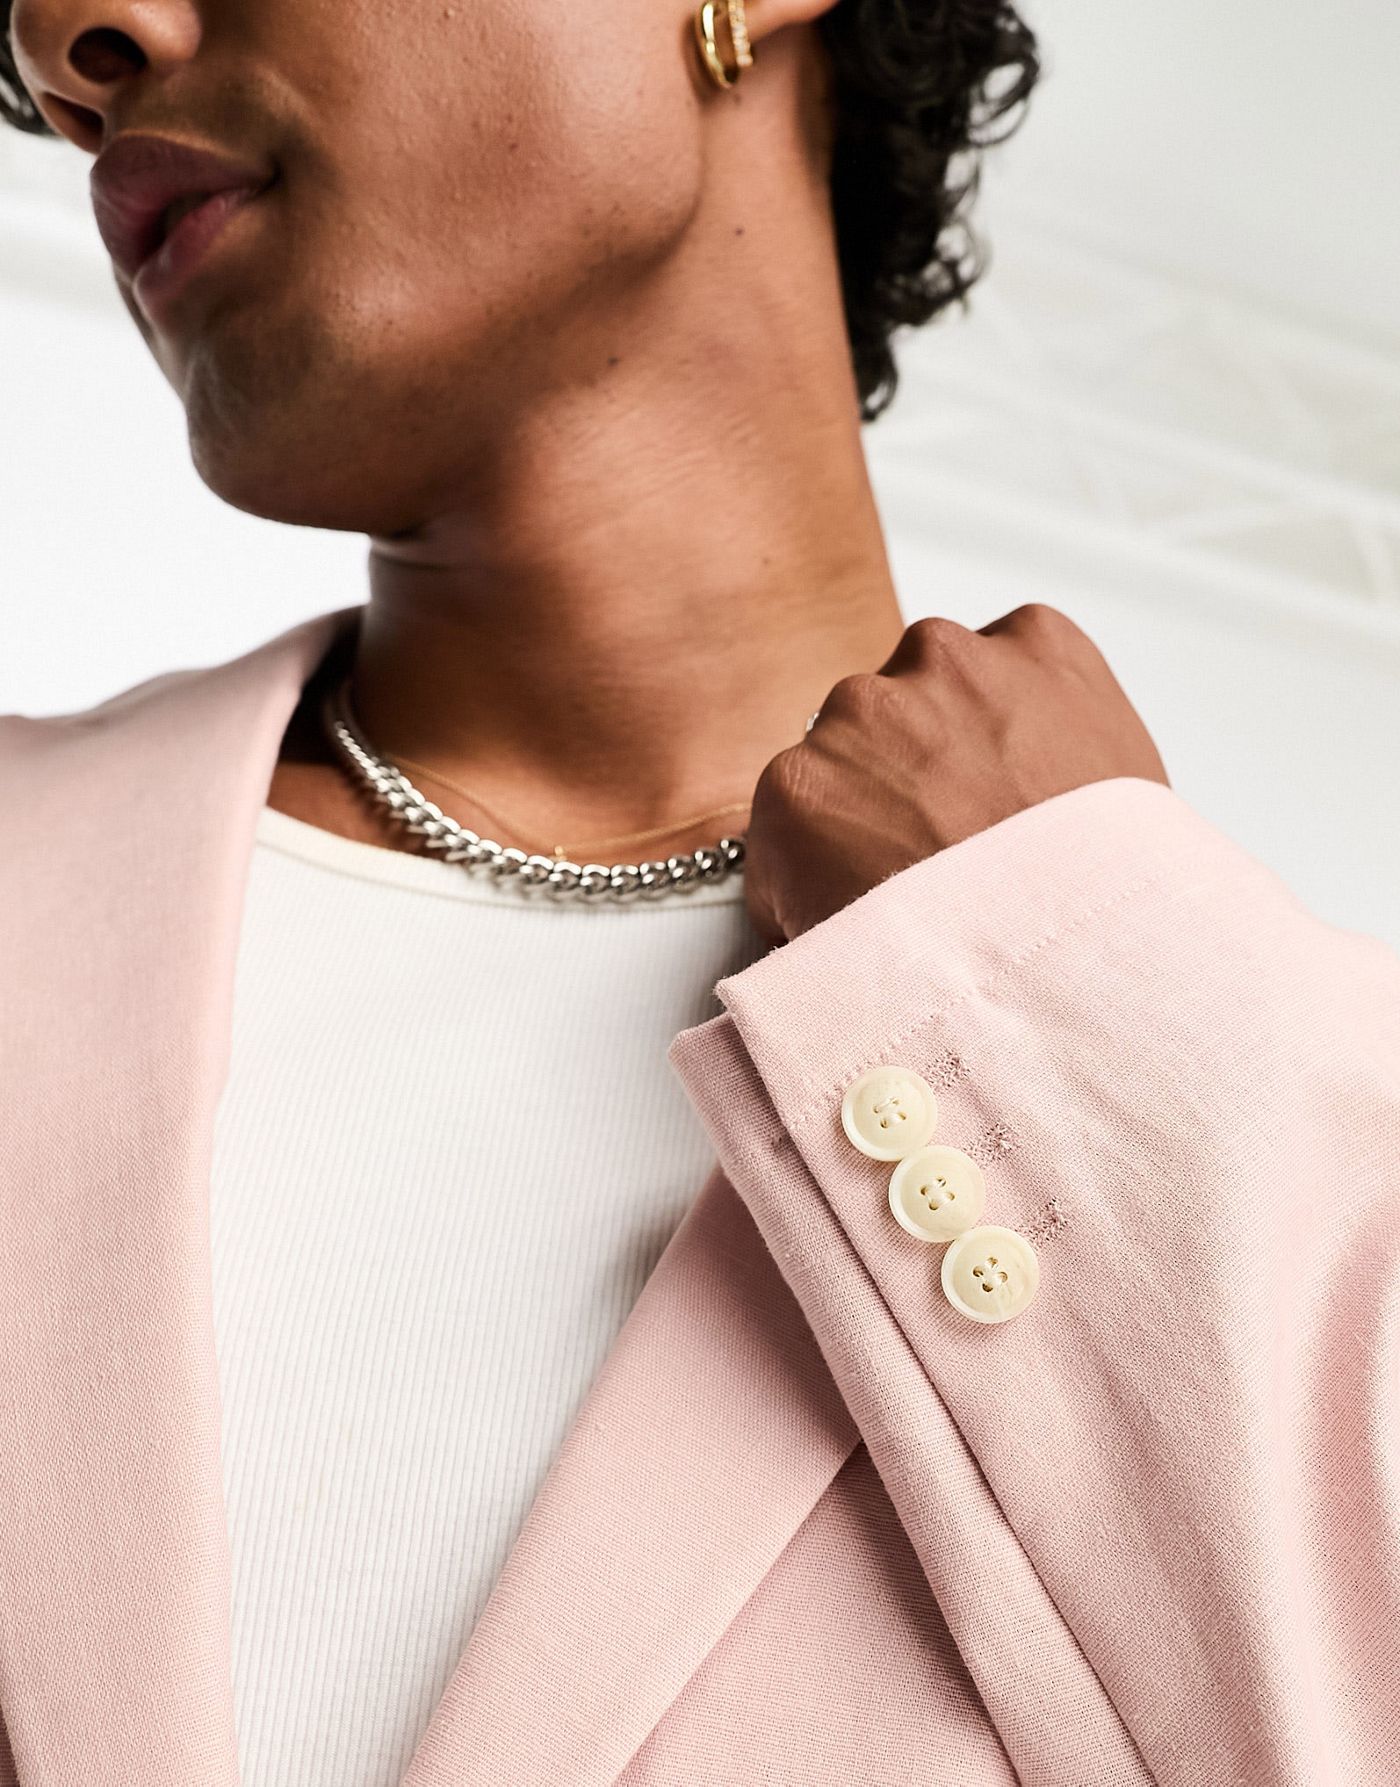 ASOS DESIGN skinny linen mix suit jacket in pink